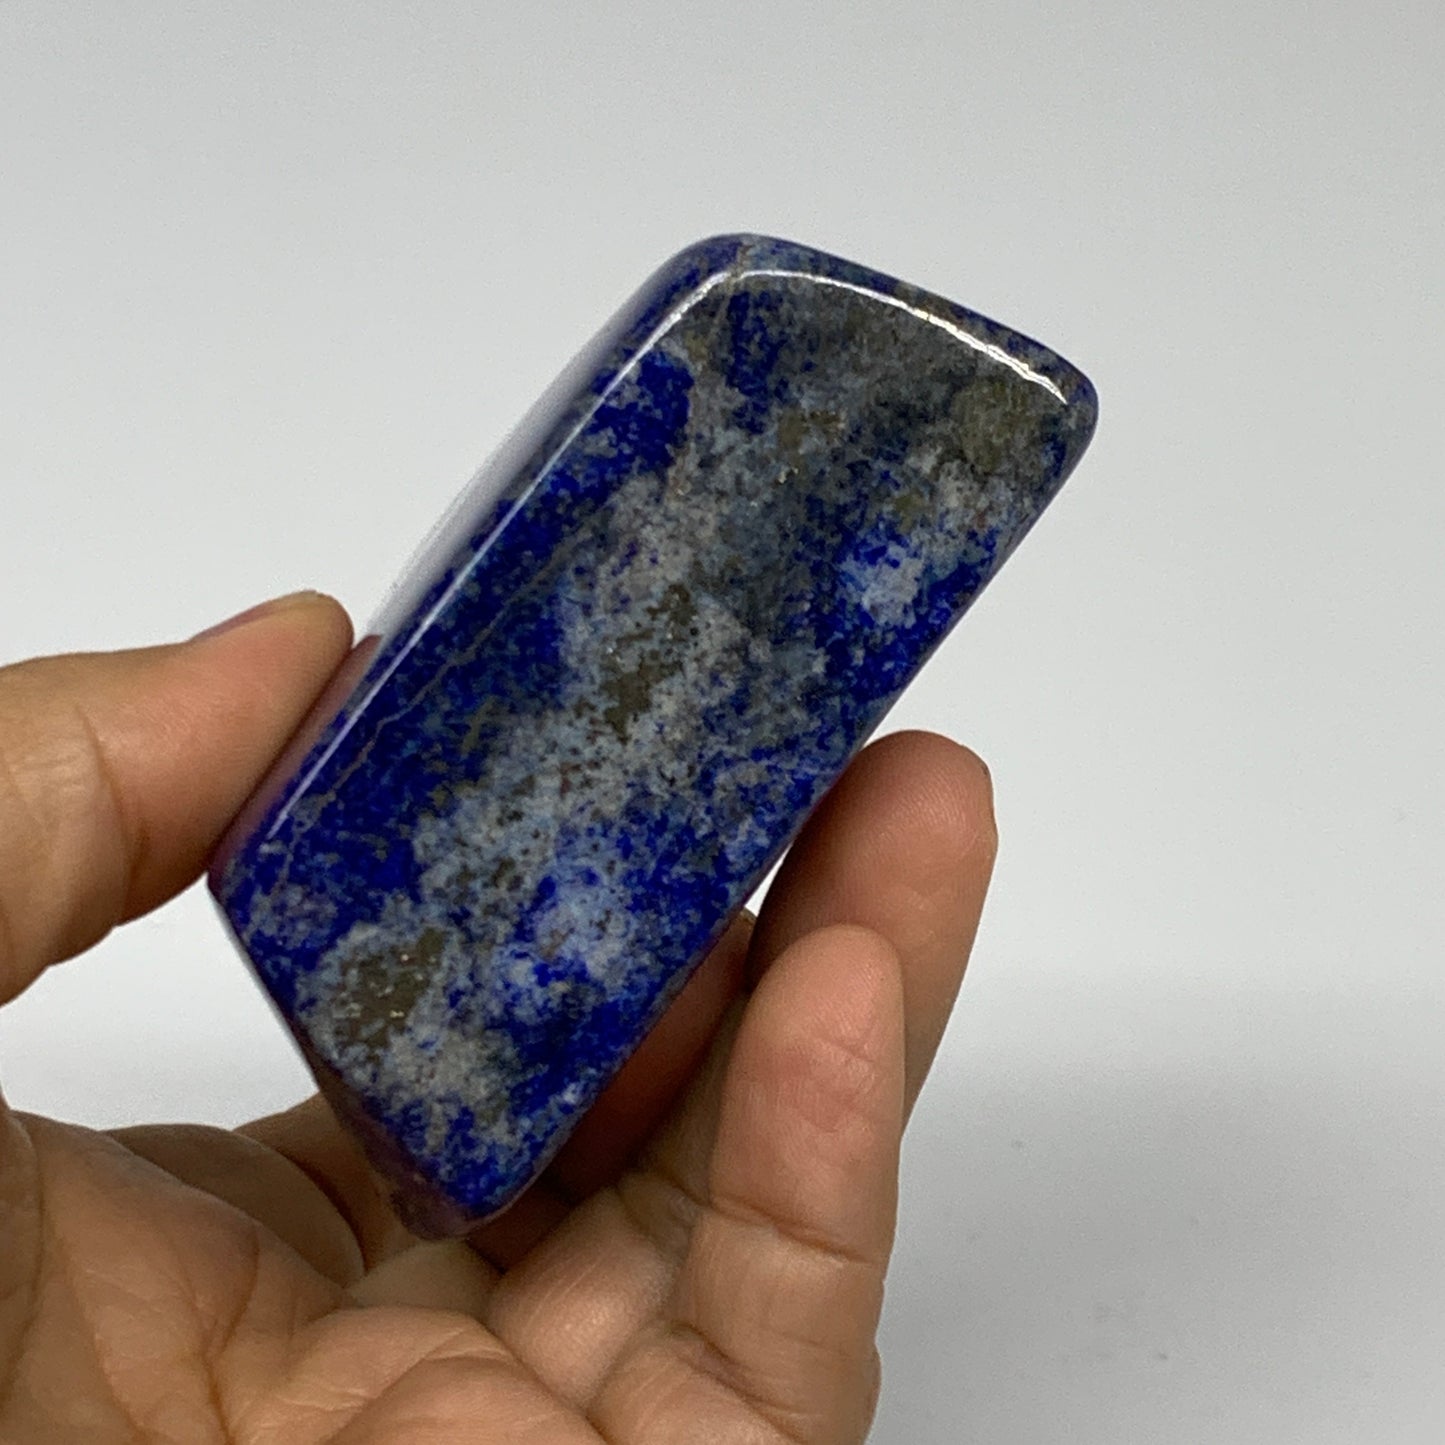 0.76 lbs, 3.4"x2.9"x1.3", Natural Freeform Lapis Lazuli from Afghanistan, B32976